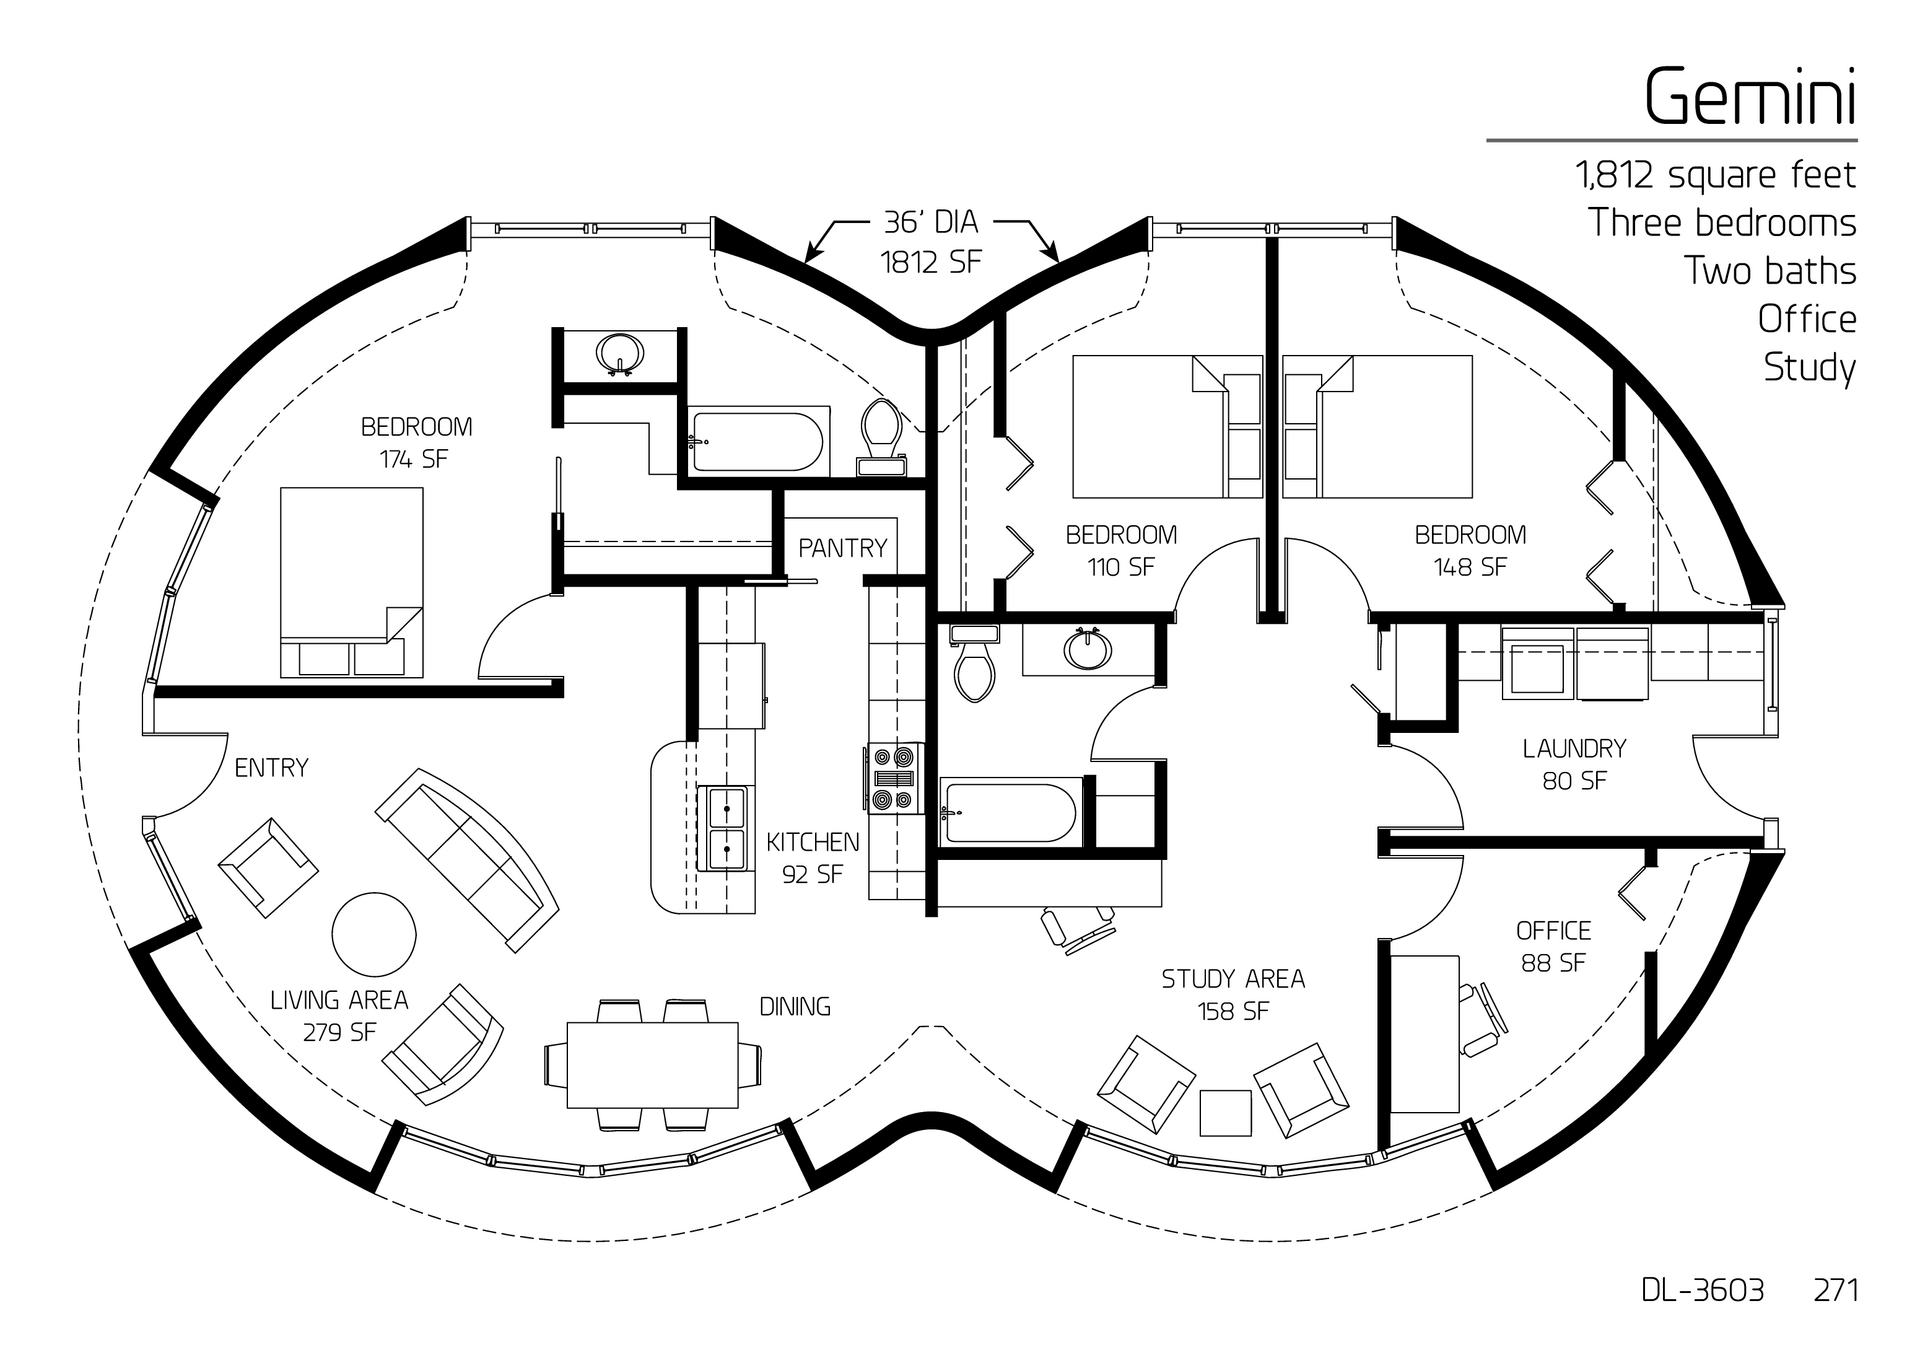 Gemini: A Two 36' Diameter Double Dome, 1,812 SF, Three-Bedroom, Two-Bath Floor Plan.